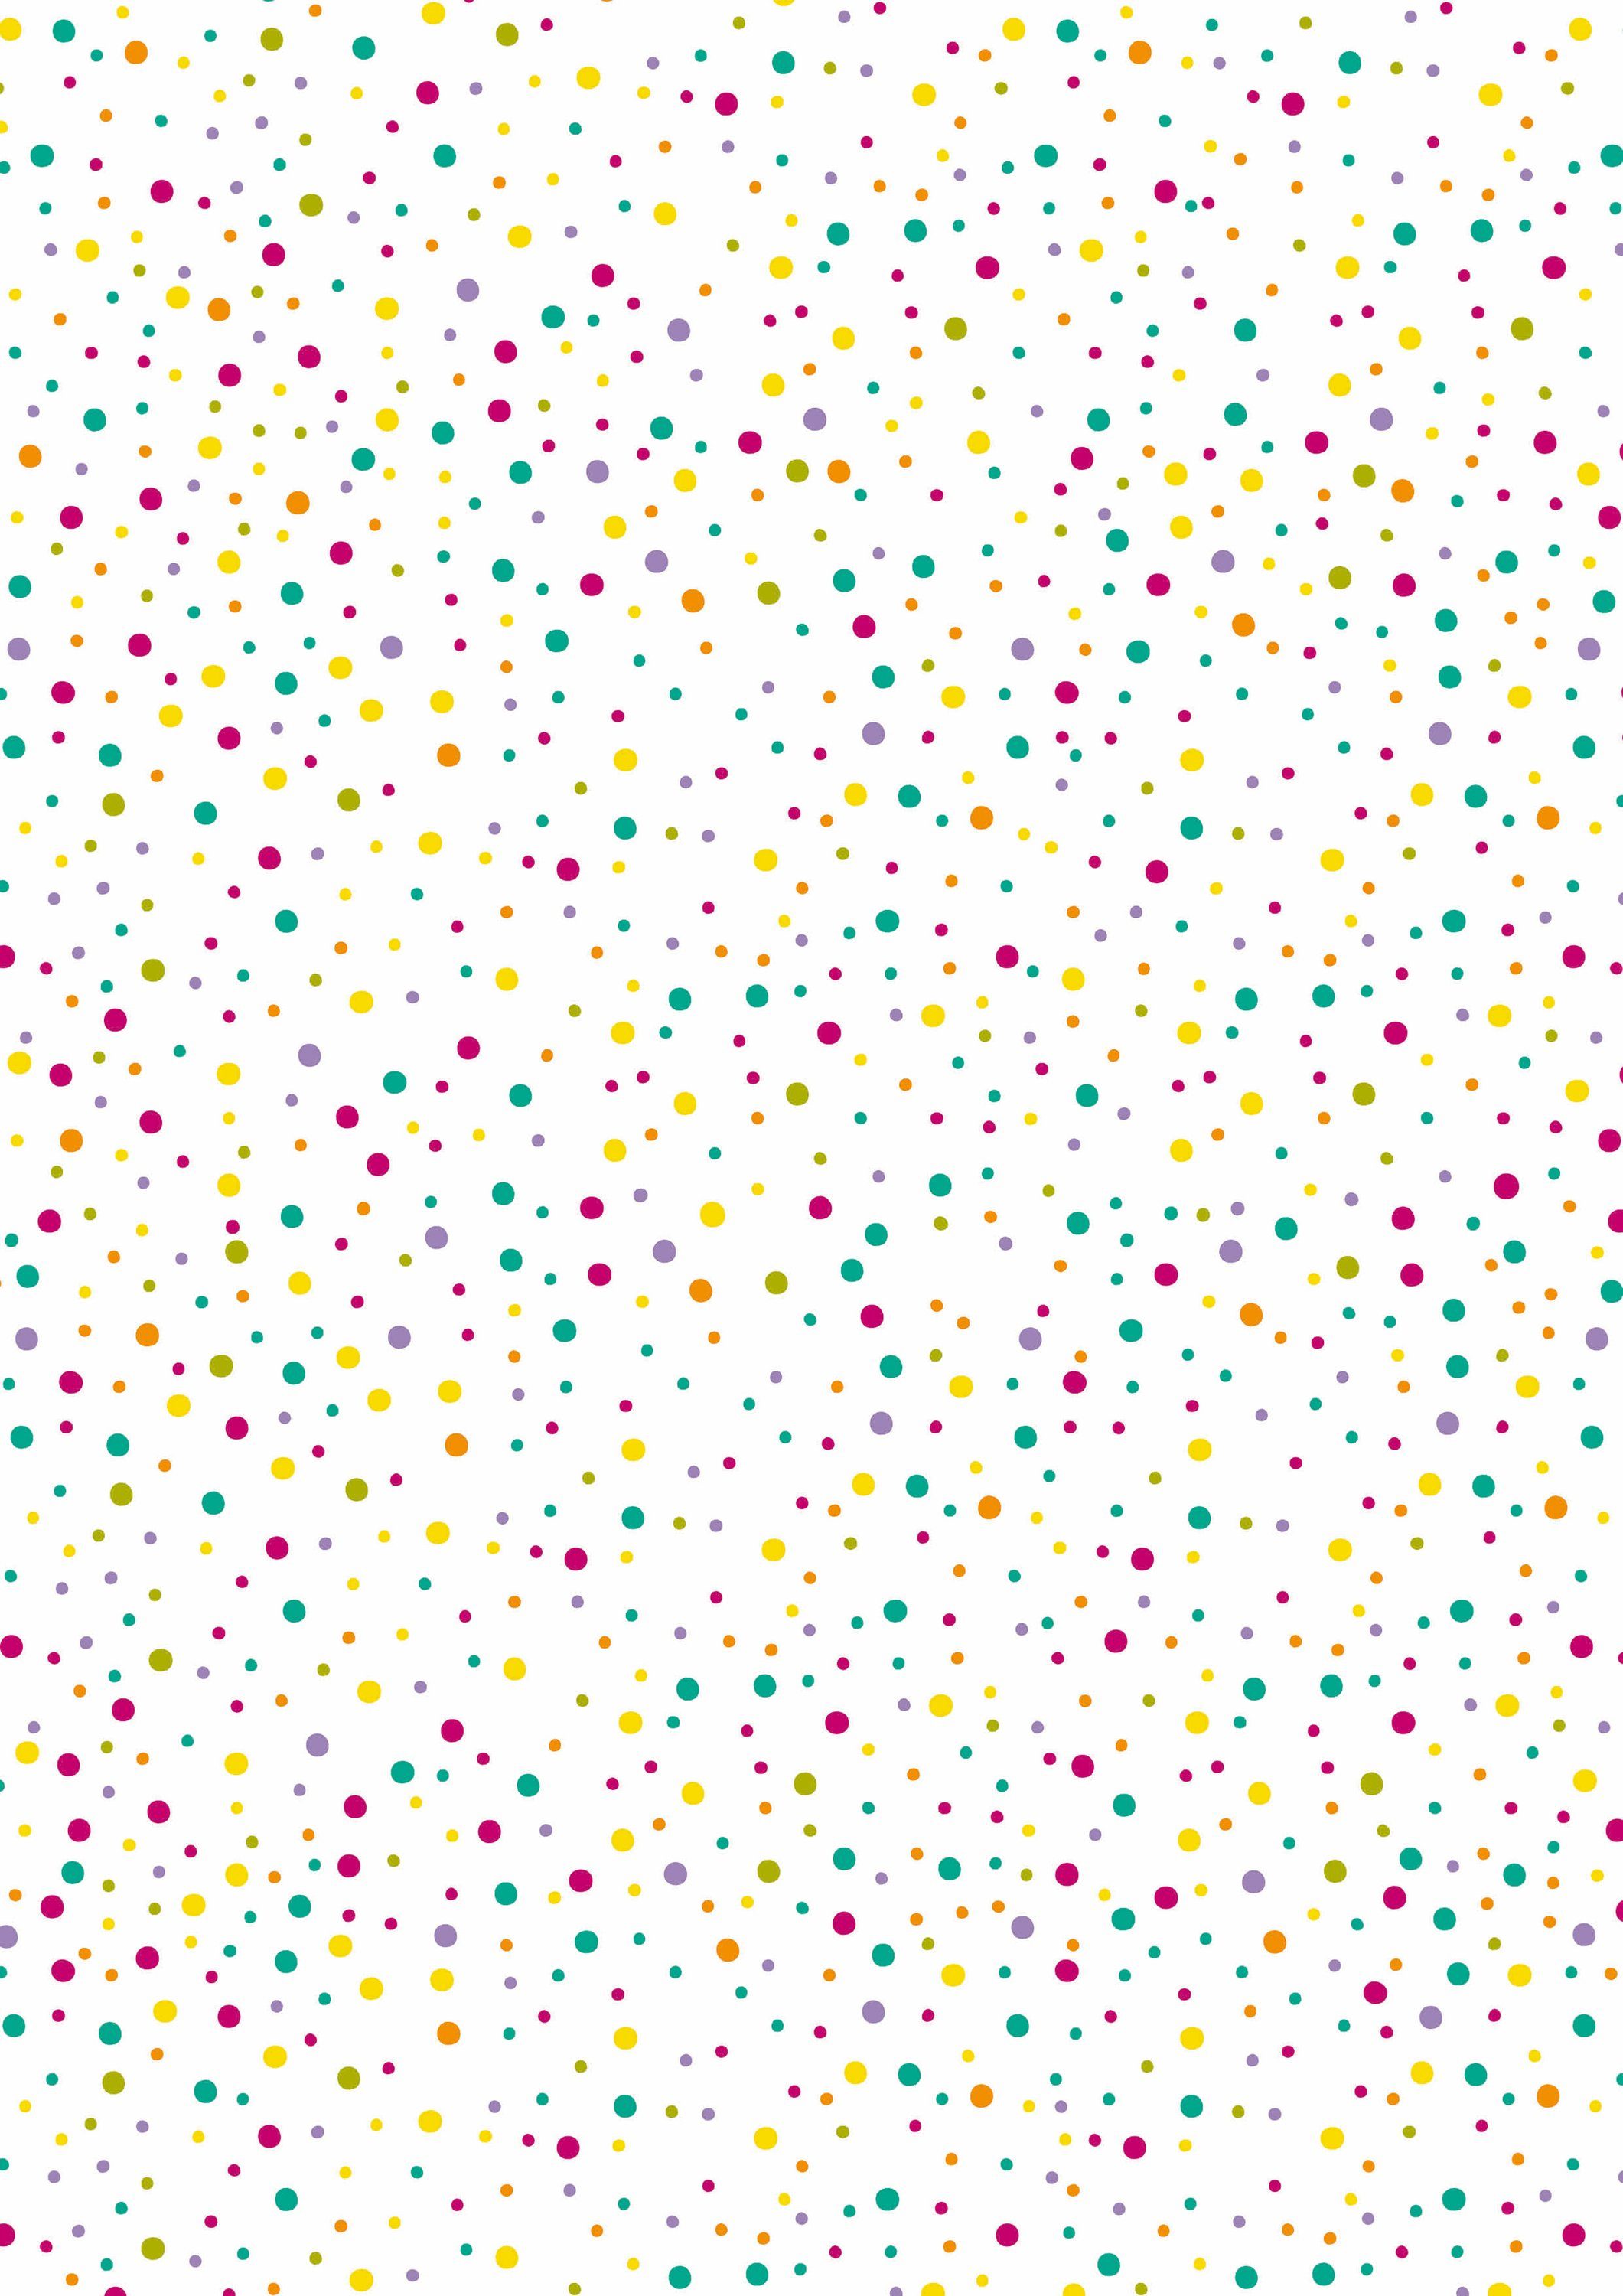 MarpaJansen Transparentpapier Regenbogen Punkte, x cm 60 50 cm